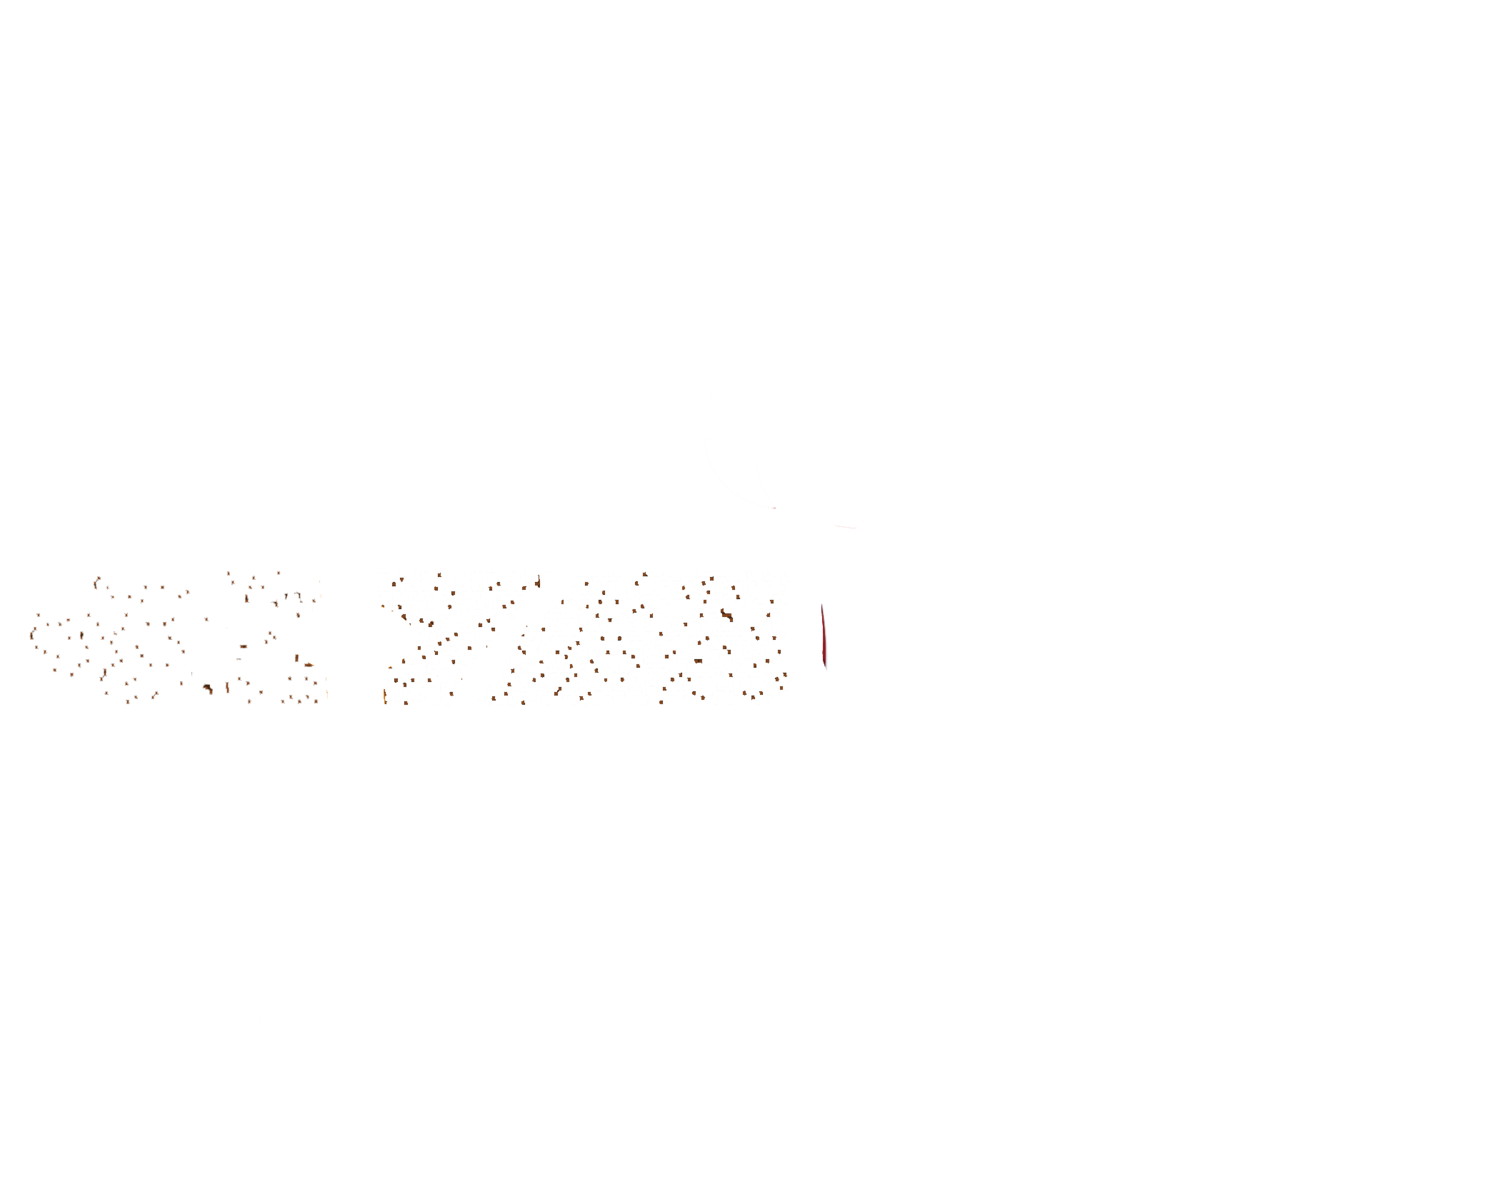 Smoke on the River